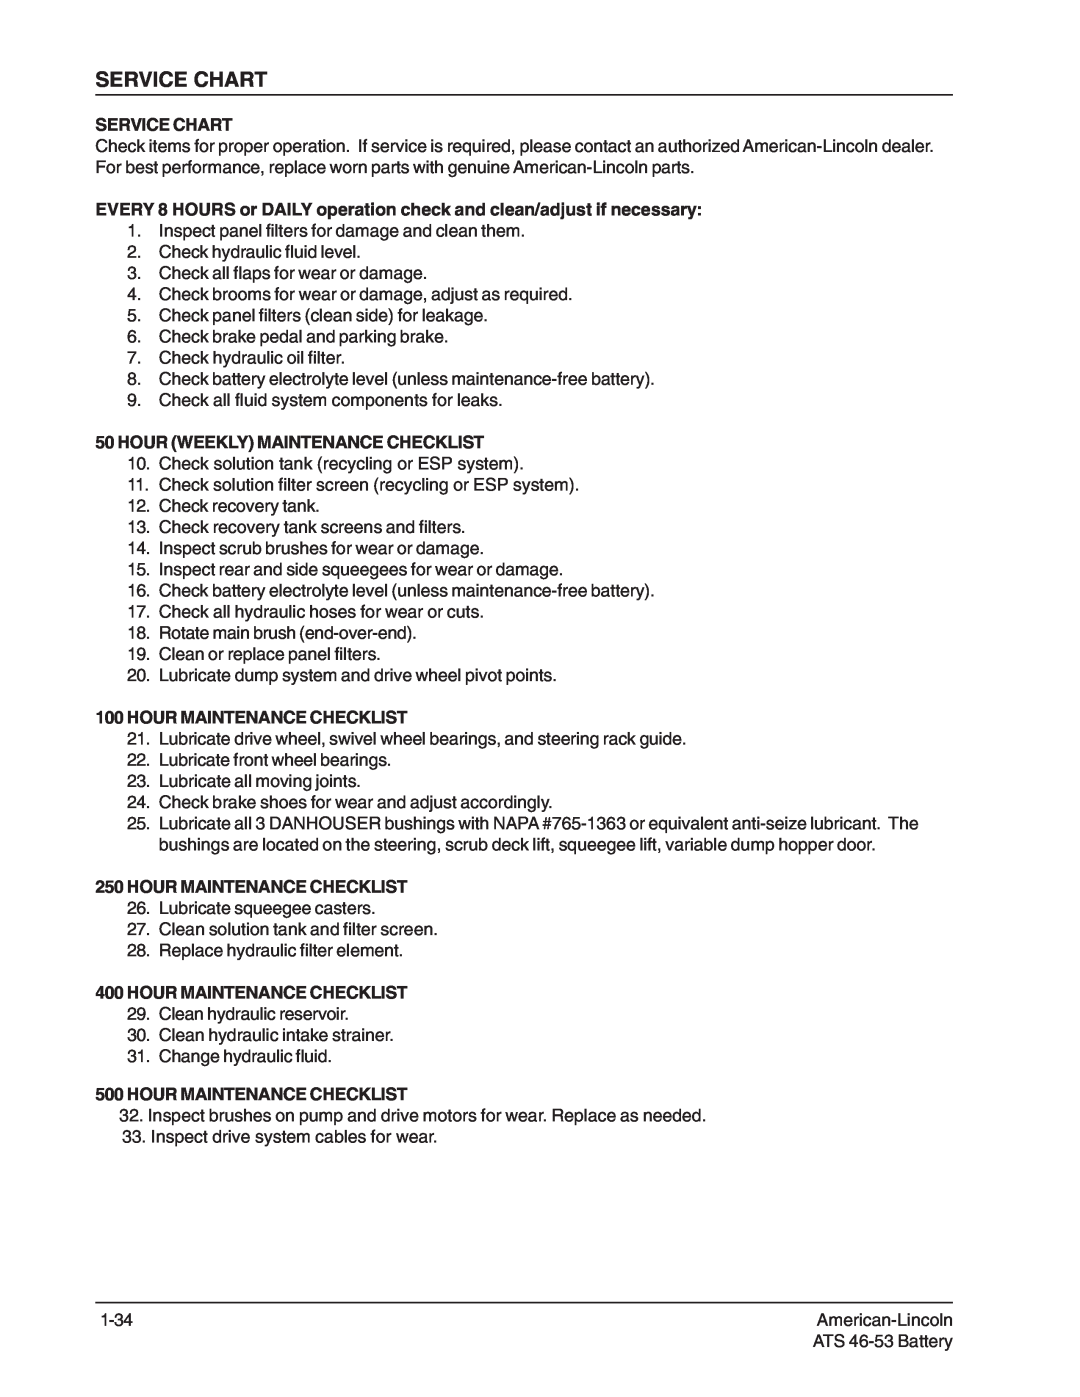 Nilfisk-ALTO 46/53 manual Service Chart, Hour Weekly Maintenance Checklist, Hour Maintenance Checklist 